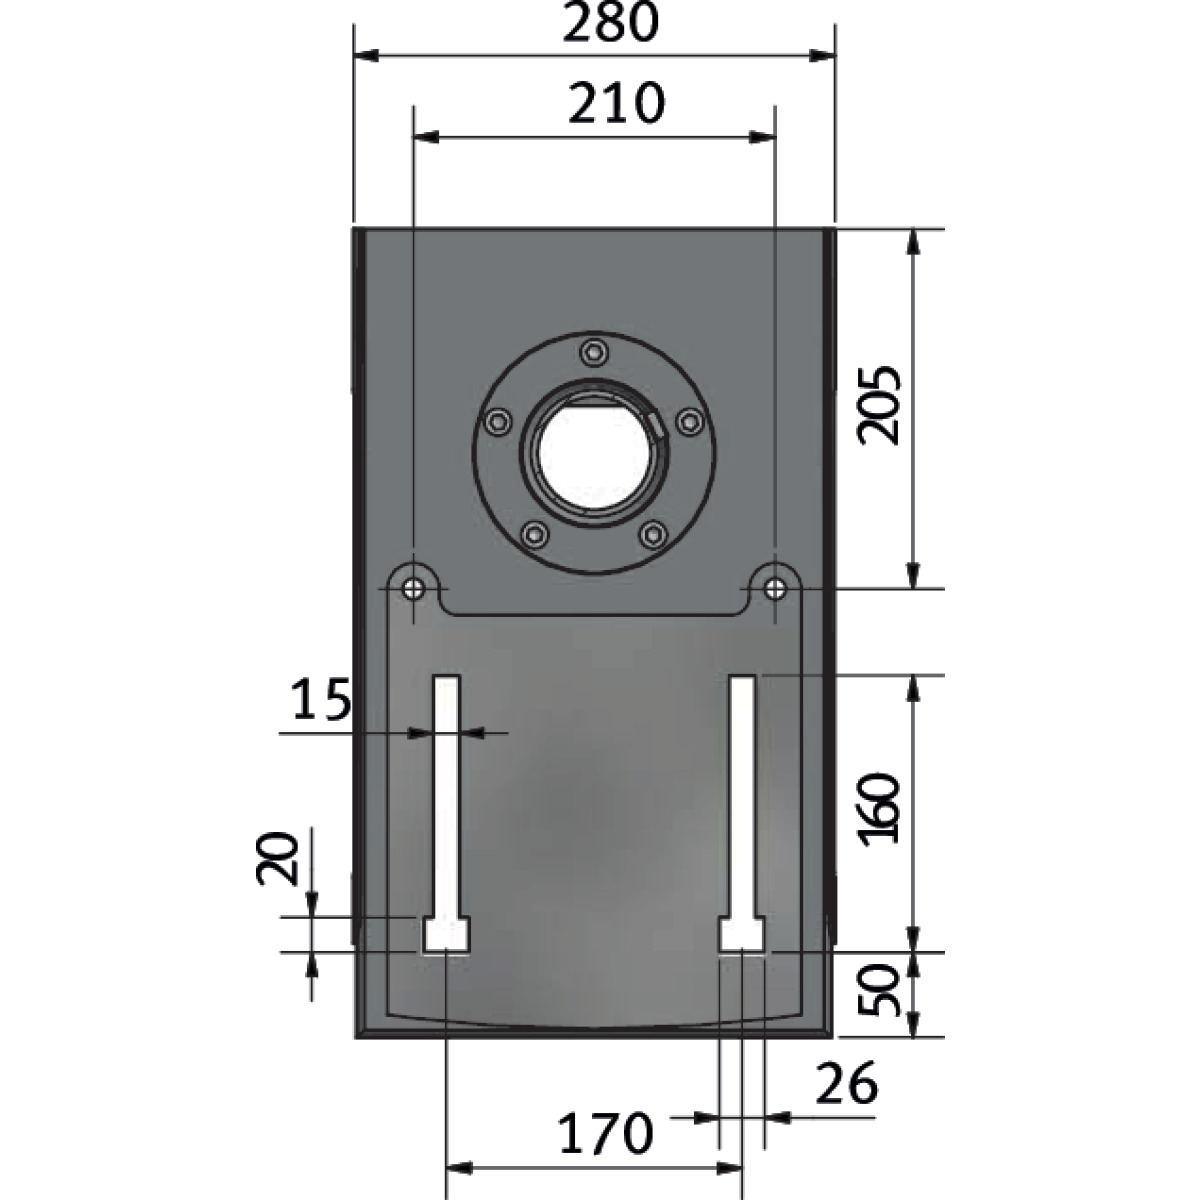 Tischbohrmaschine OPTIdrill D 23Pro (400 V)